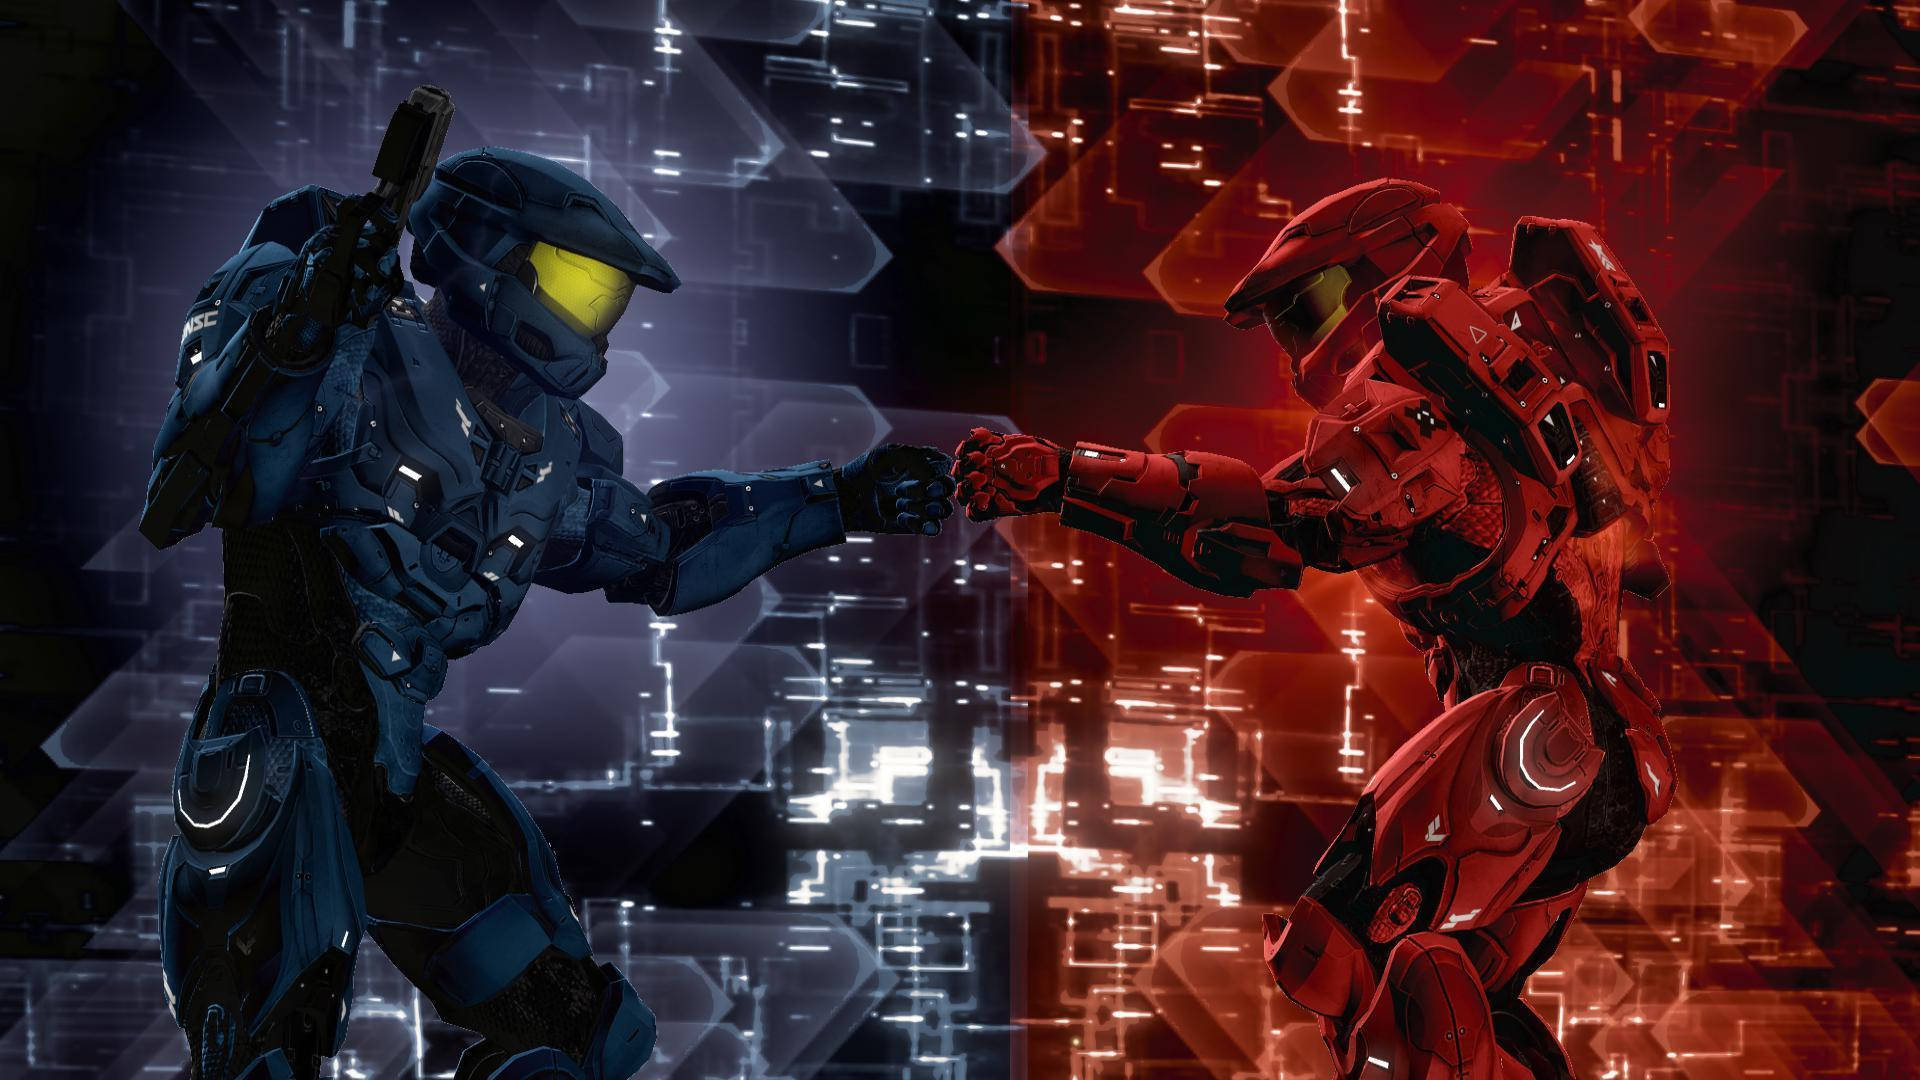 Blu v. Halo Red vs Blue. Halo Red vs Blue игра. Halo Red vs Blue персонажи. Красные против синих.